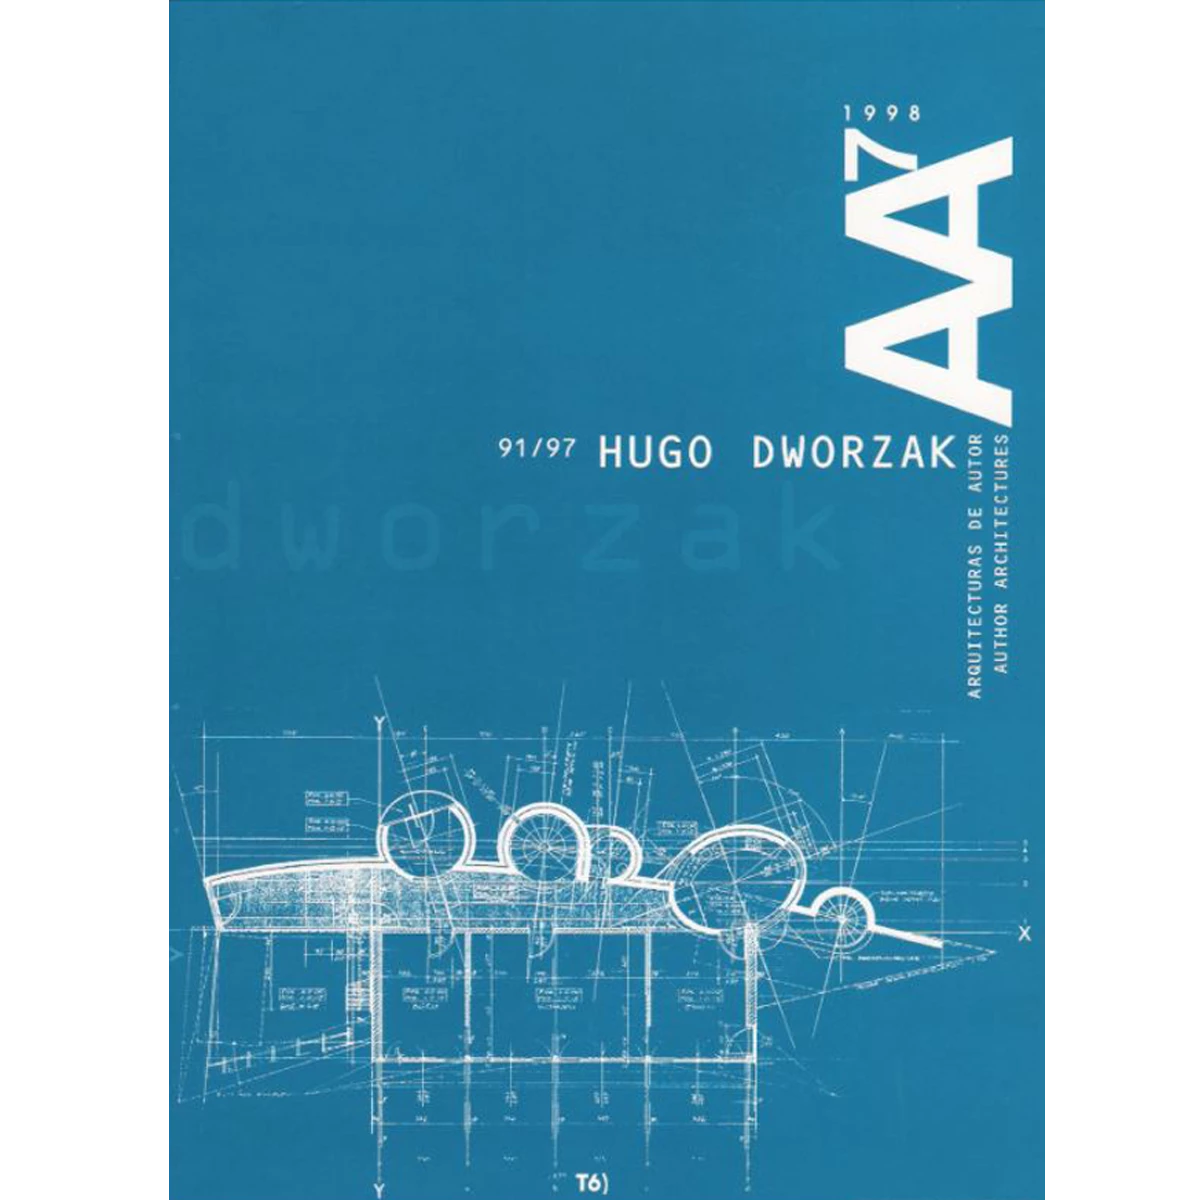 Hugo Dworzak: works